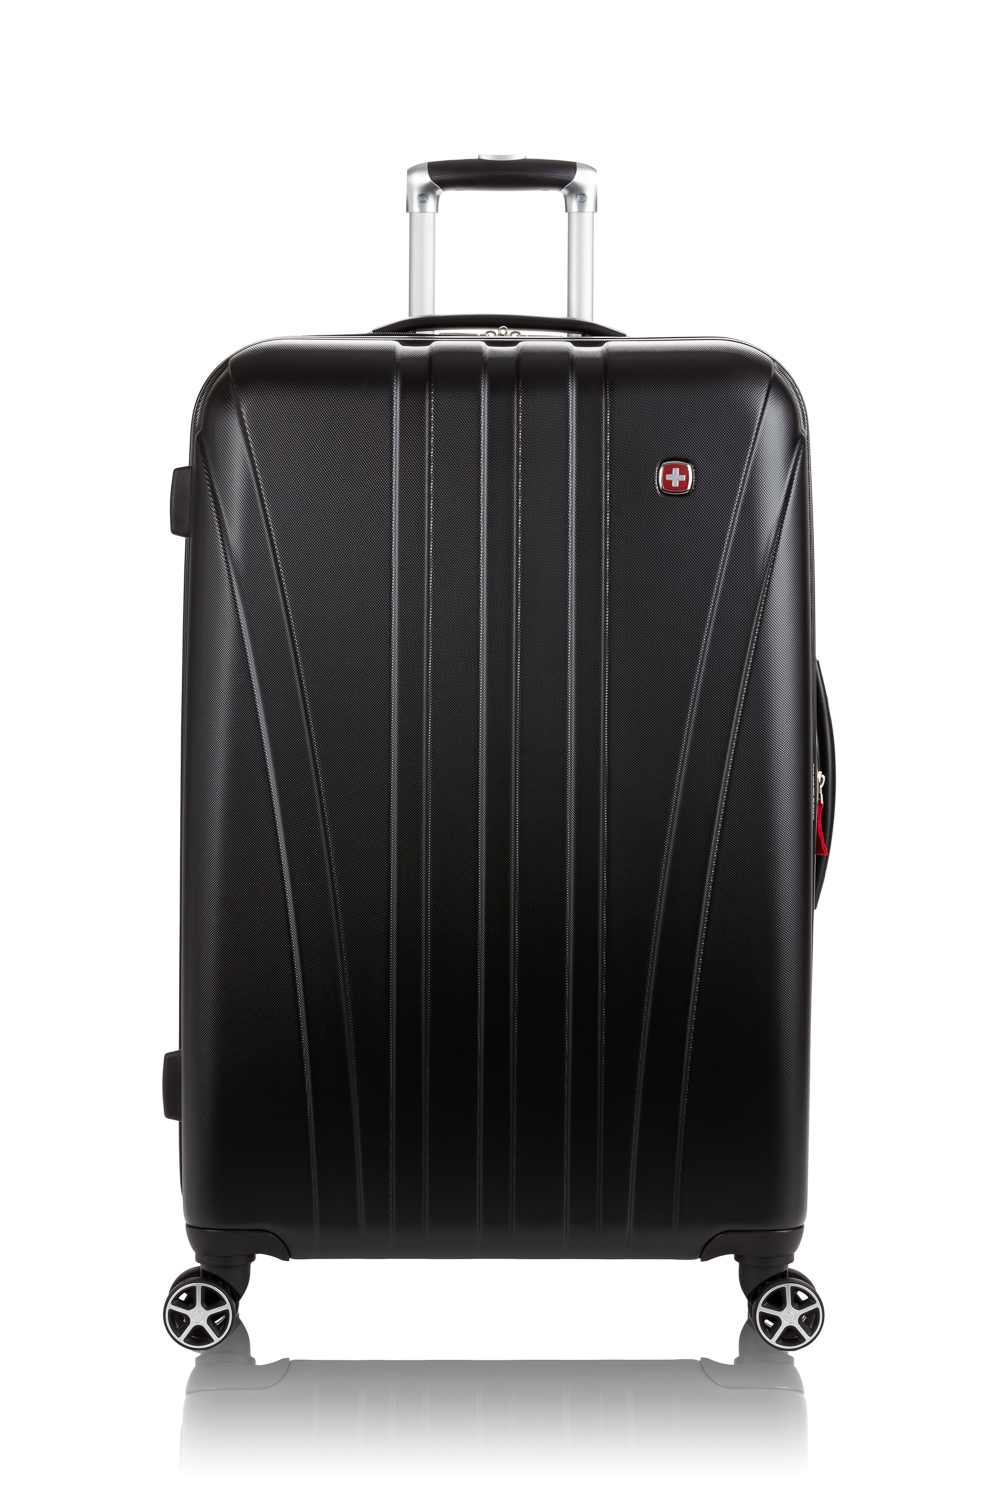 Silver SwissGear 7585 Hardside Spinner Luggage Checked-Medium 23-Inch 